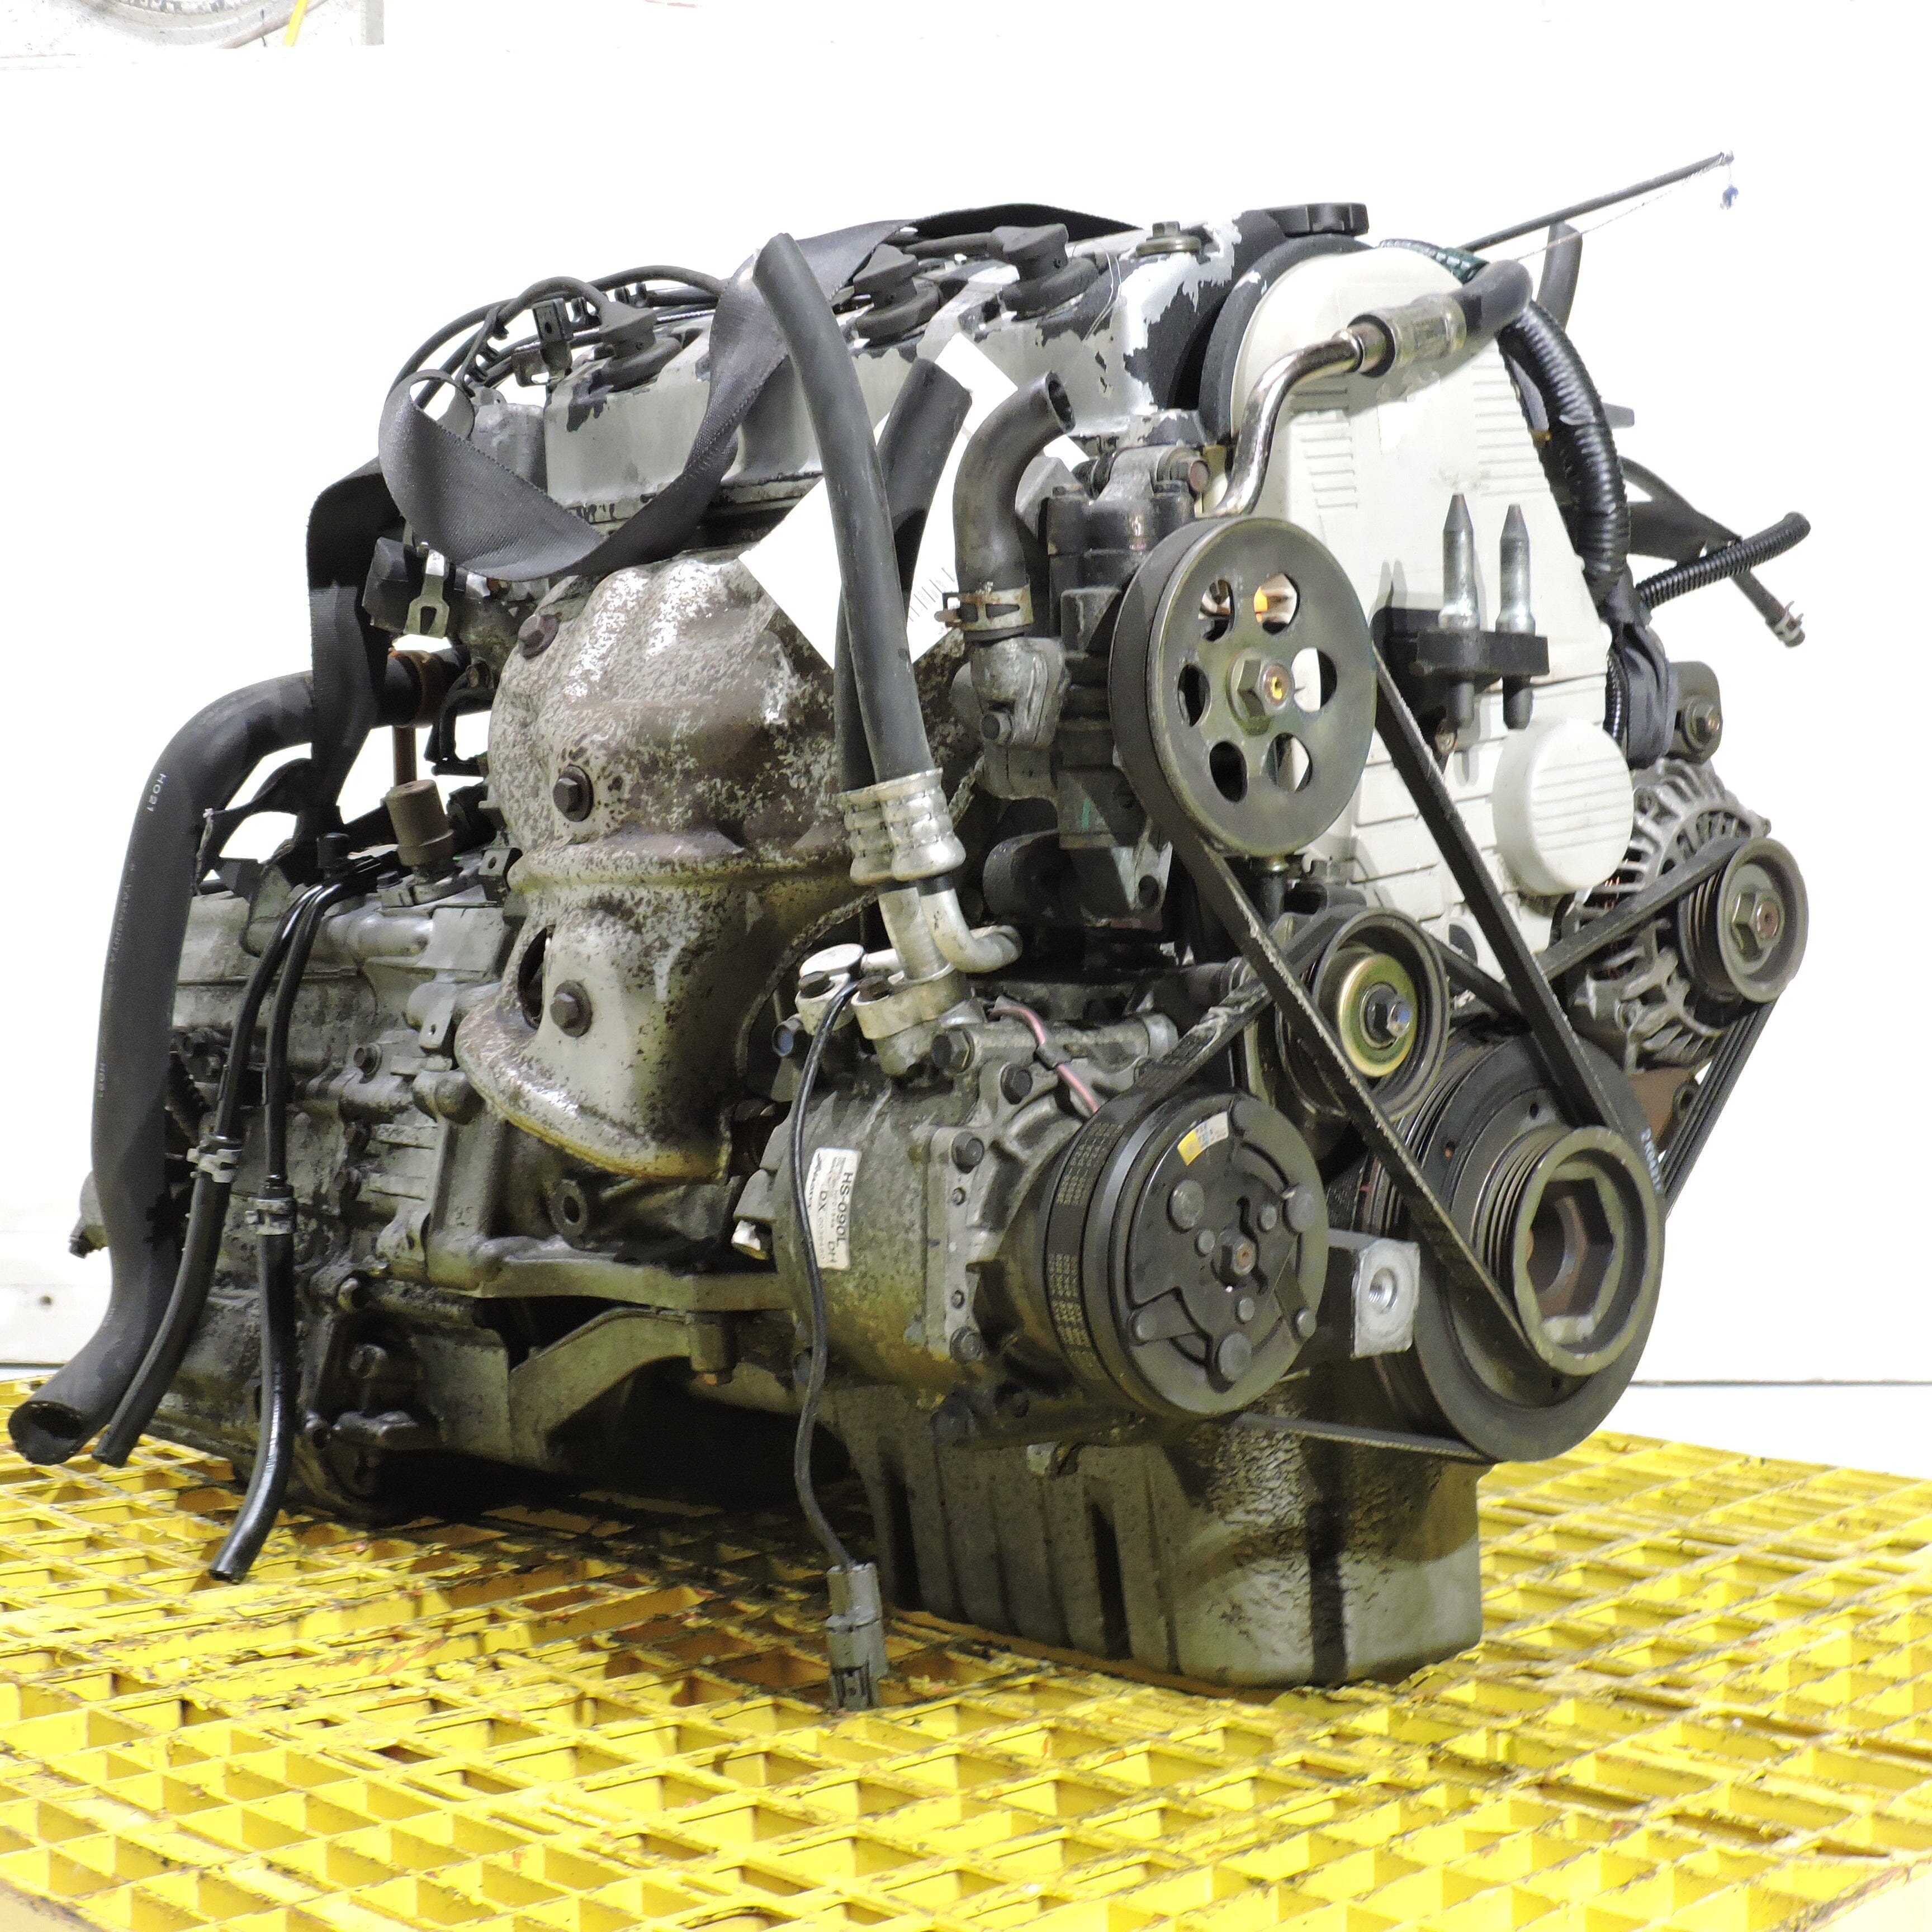 Honda Civic 1996-2000 1.6L 4-Cylinder VTEC JDM Engine Automatic Transmission Swap - D16Y6 - 1992 honda civic - 12